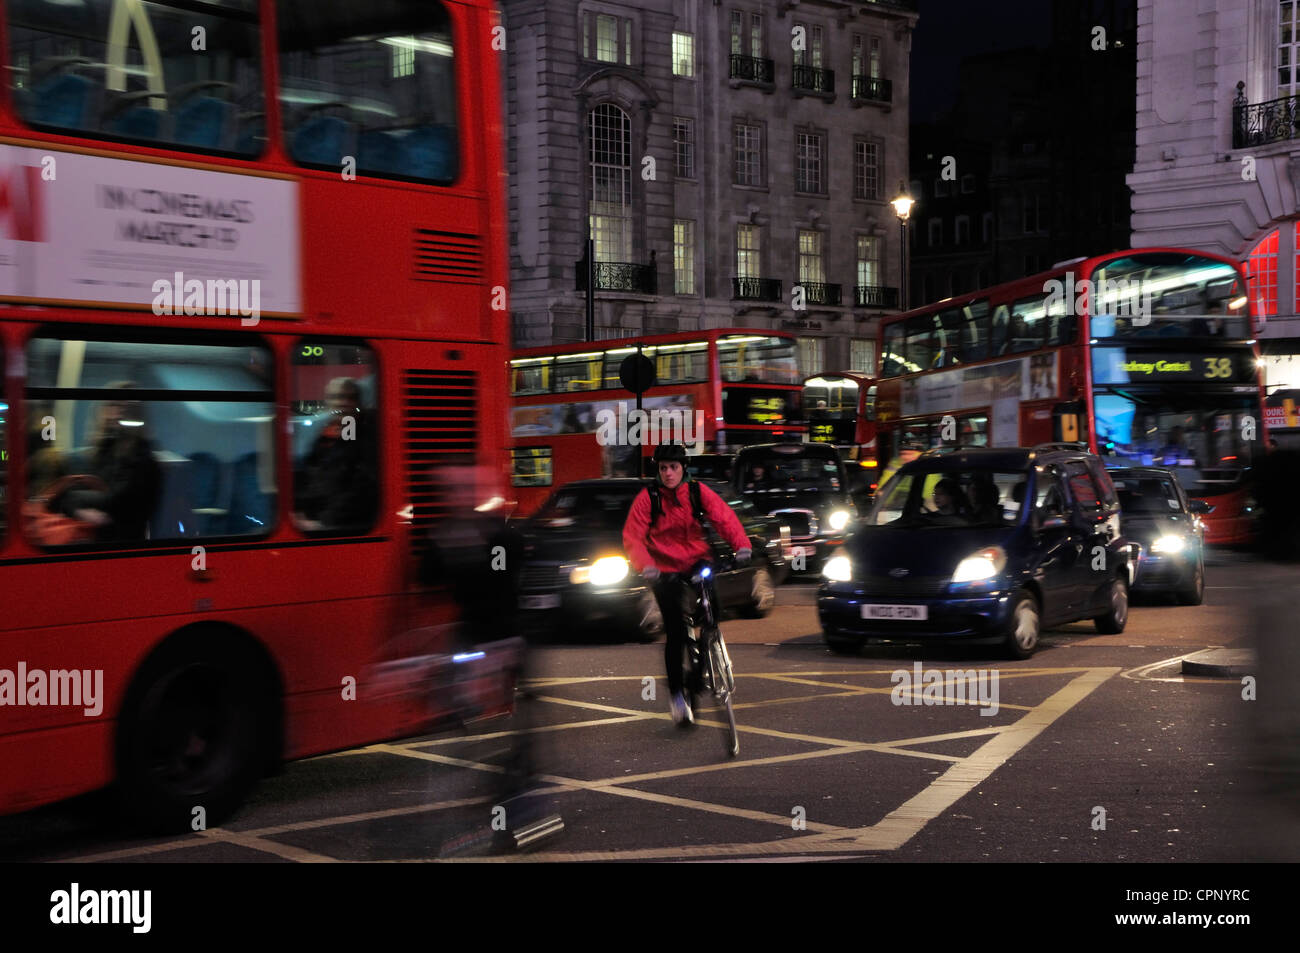 cyclists-negotiating-london-traffic-at-n